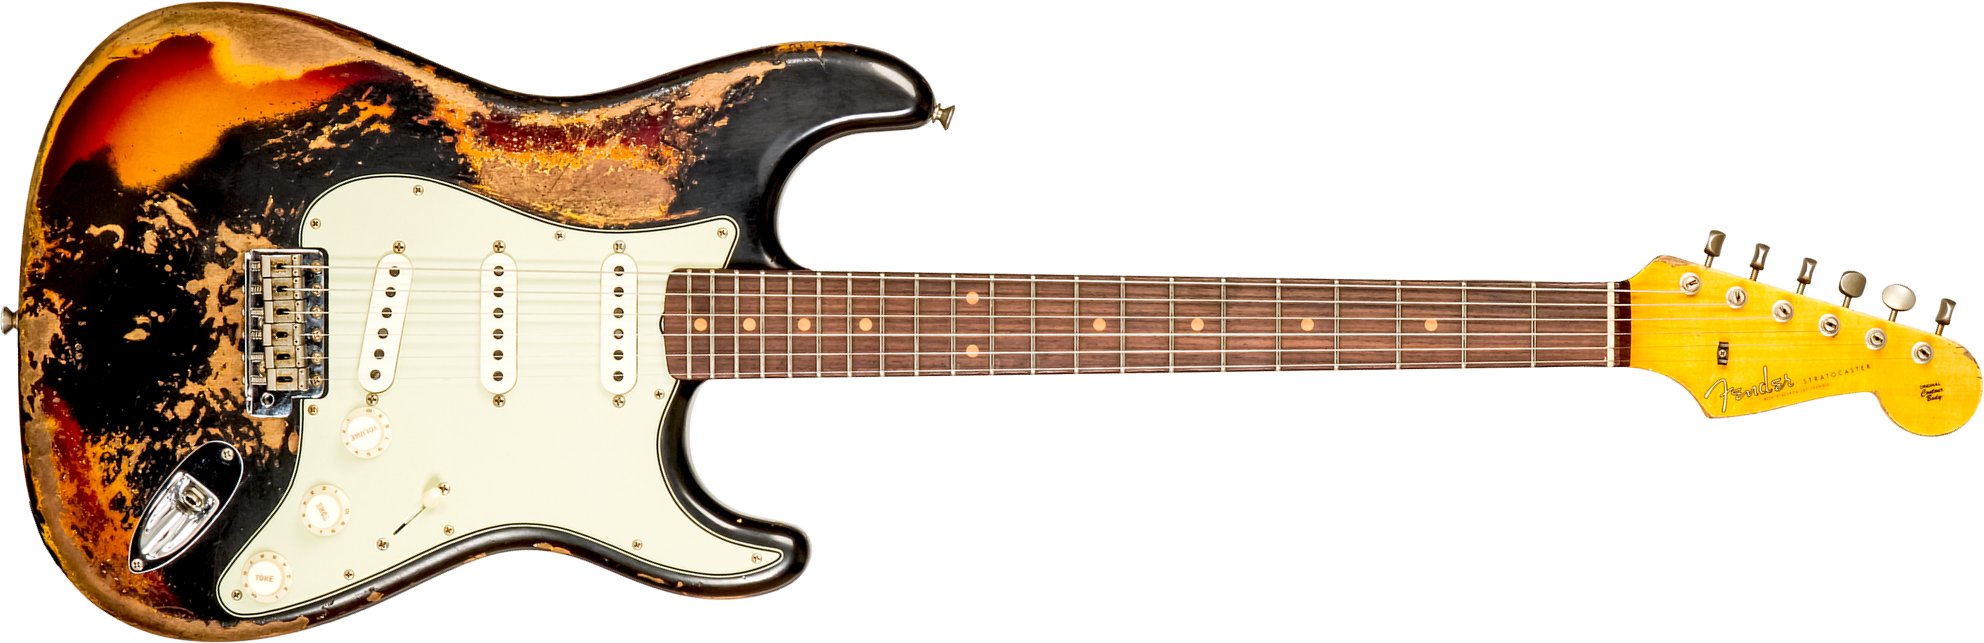 Fender Custom Shop Strat 1959 3s Trem Rw #cz576154 - Super Heavy Relic Black O. 3-color Sunburst - Elektrische gitaar in Str-vorm - Main picture